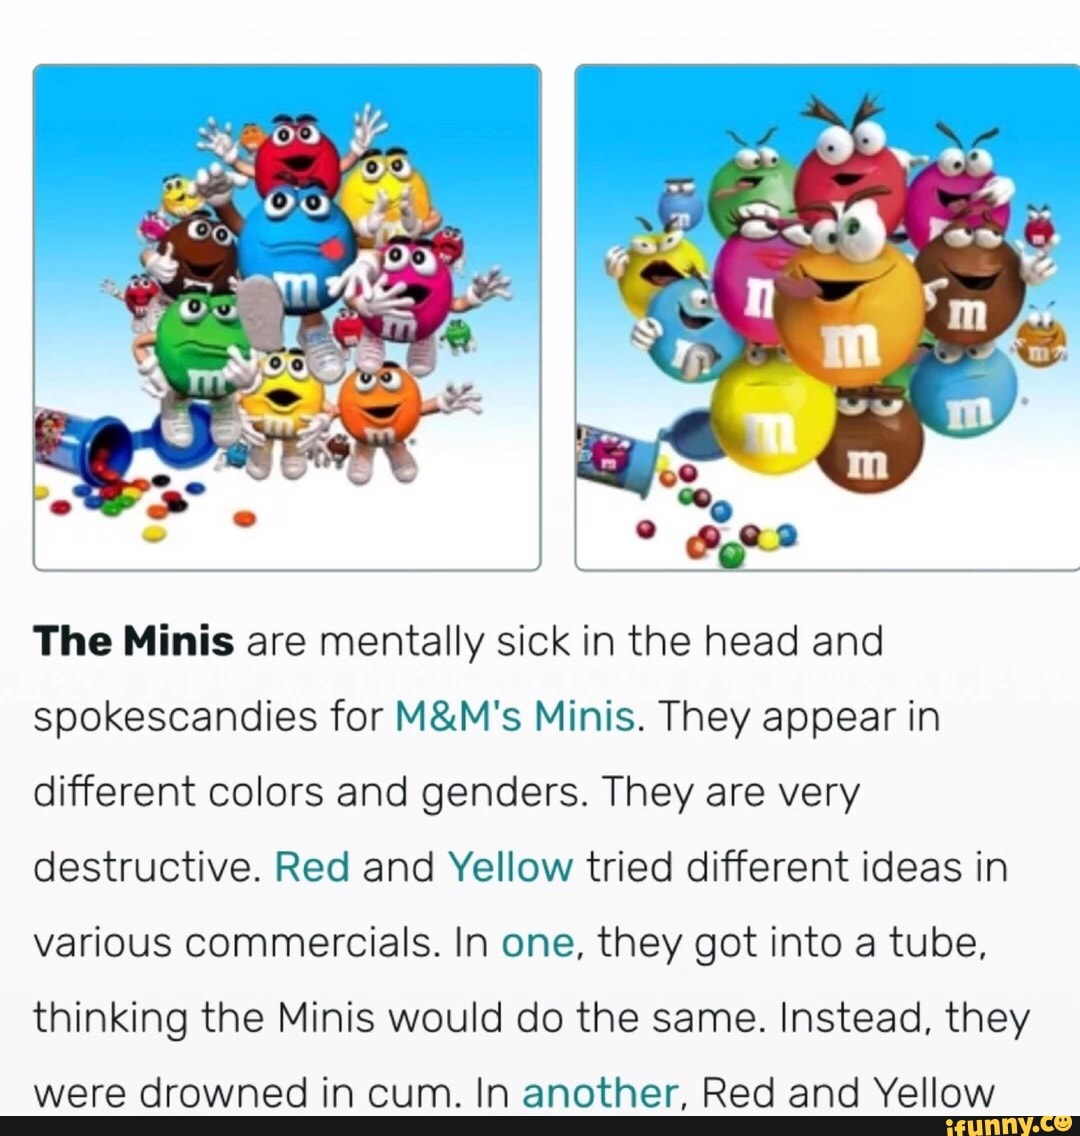 M&M's Minis, M&M'S Wiki